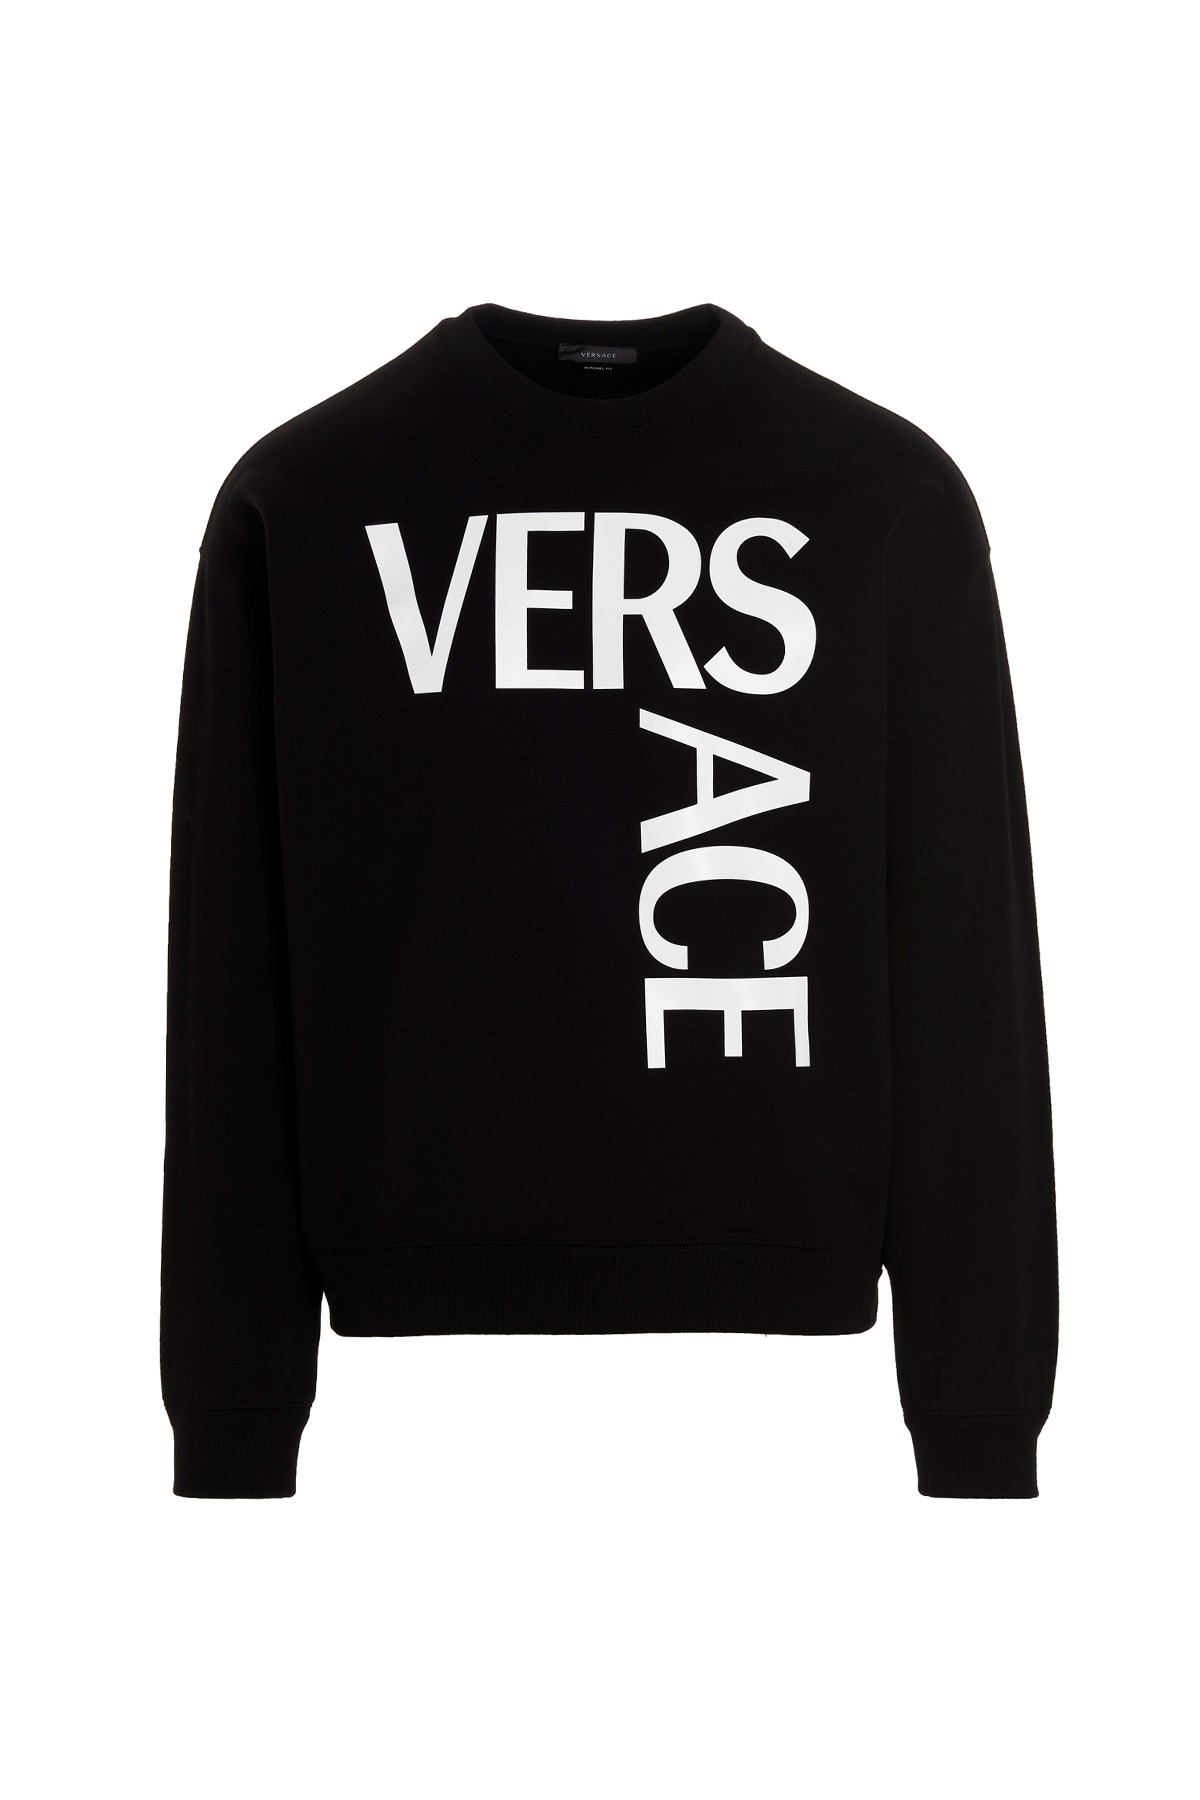 VERSACE Logo Printed Sweatshirt